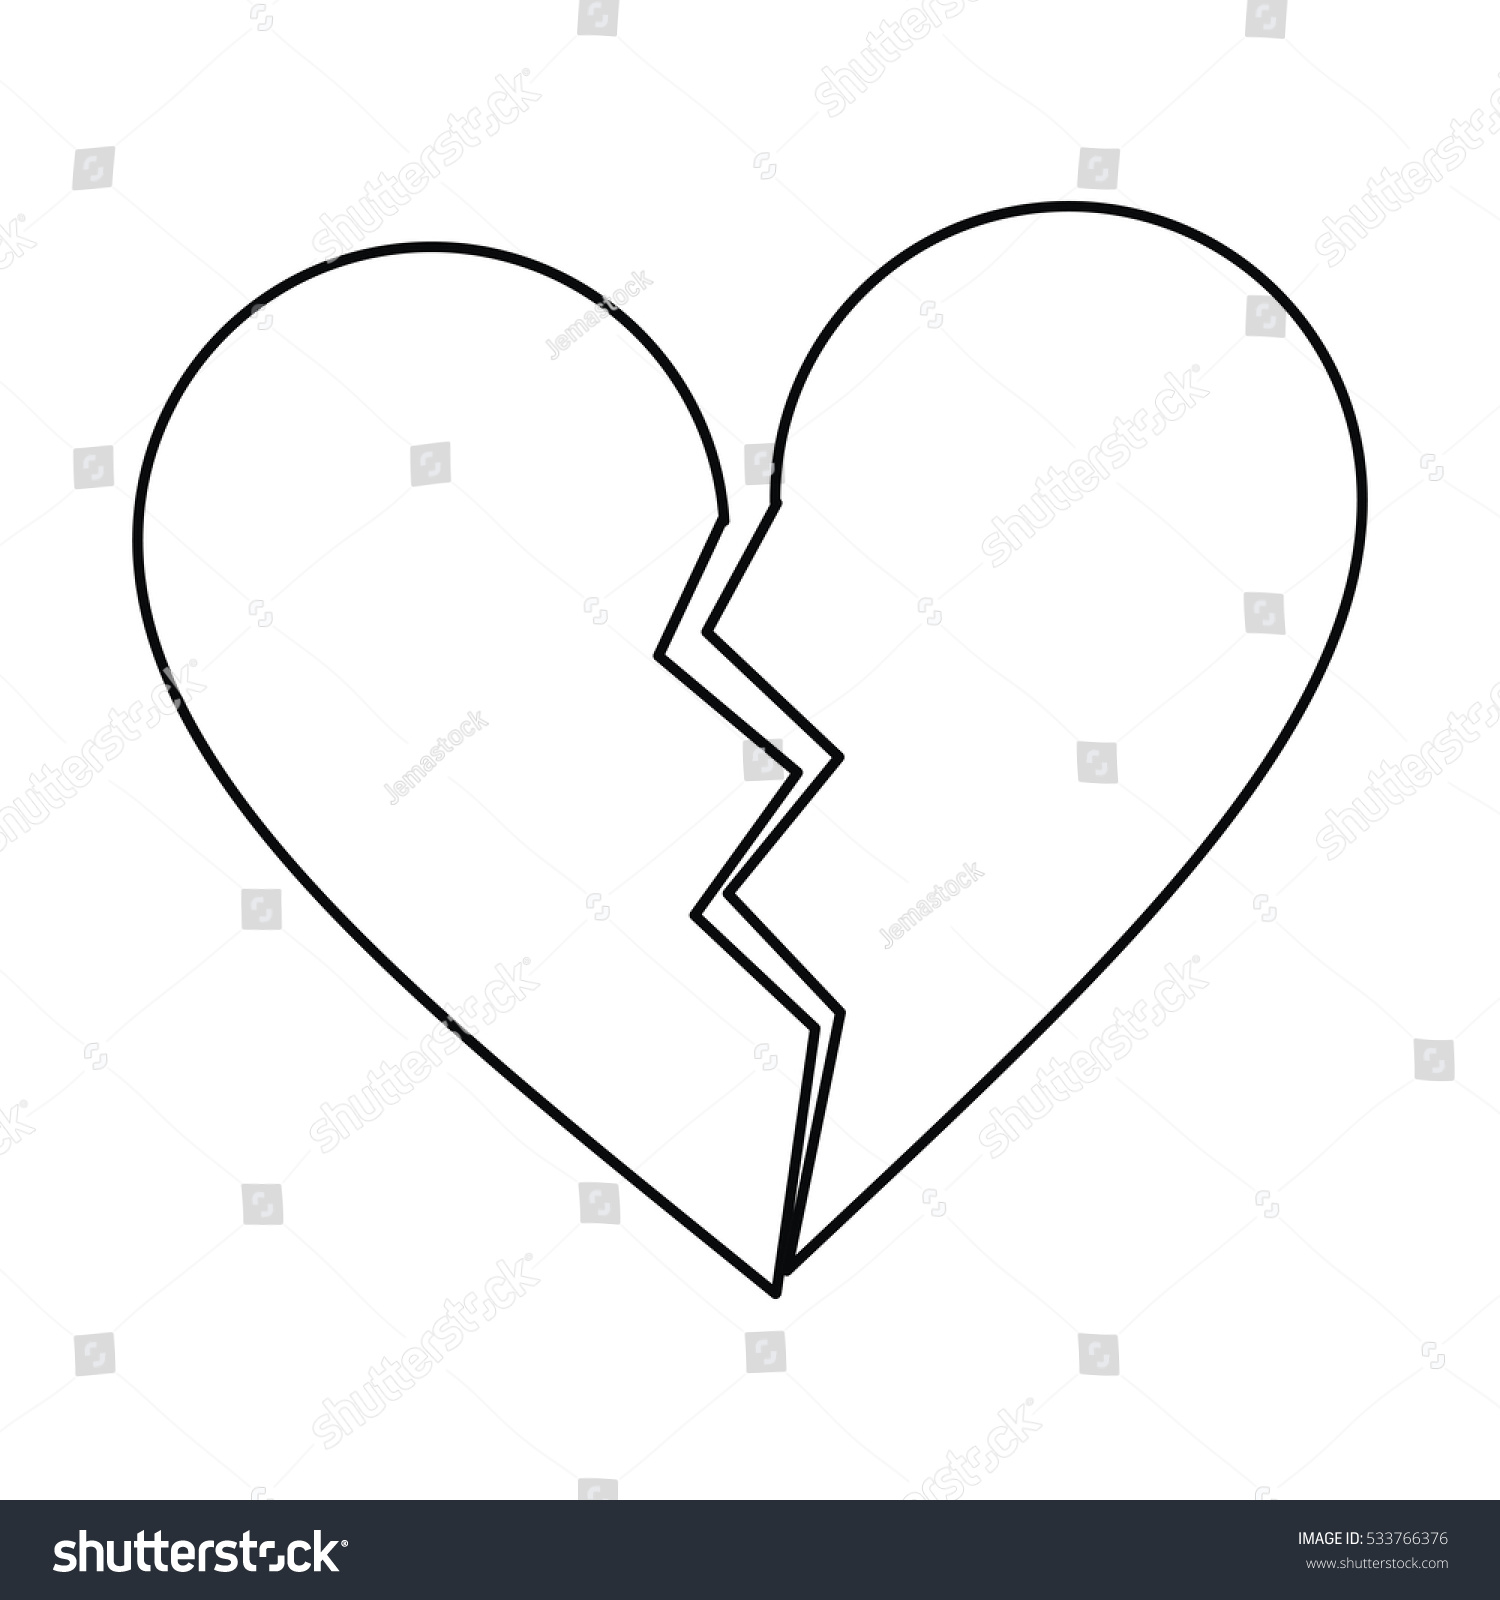 Heart Broken Sad Separation Outline Stock Vector Royalty Free 533766376 Shutterstock 9036